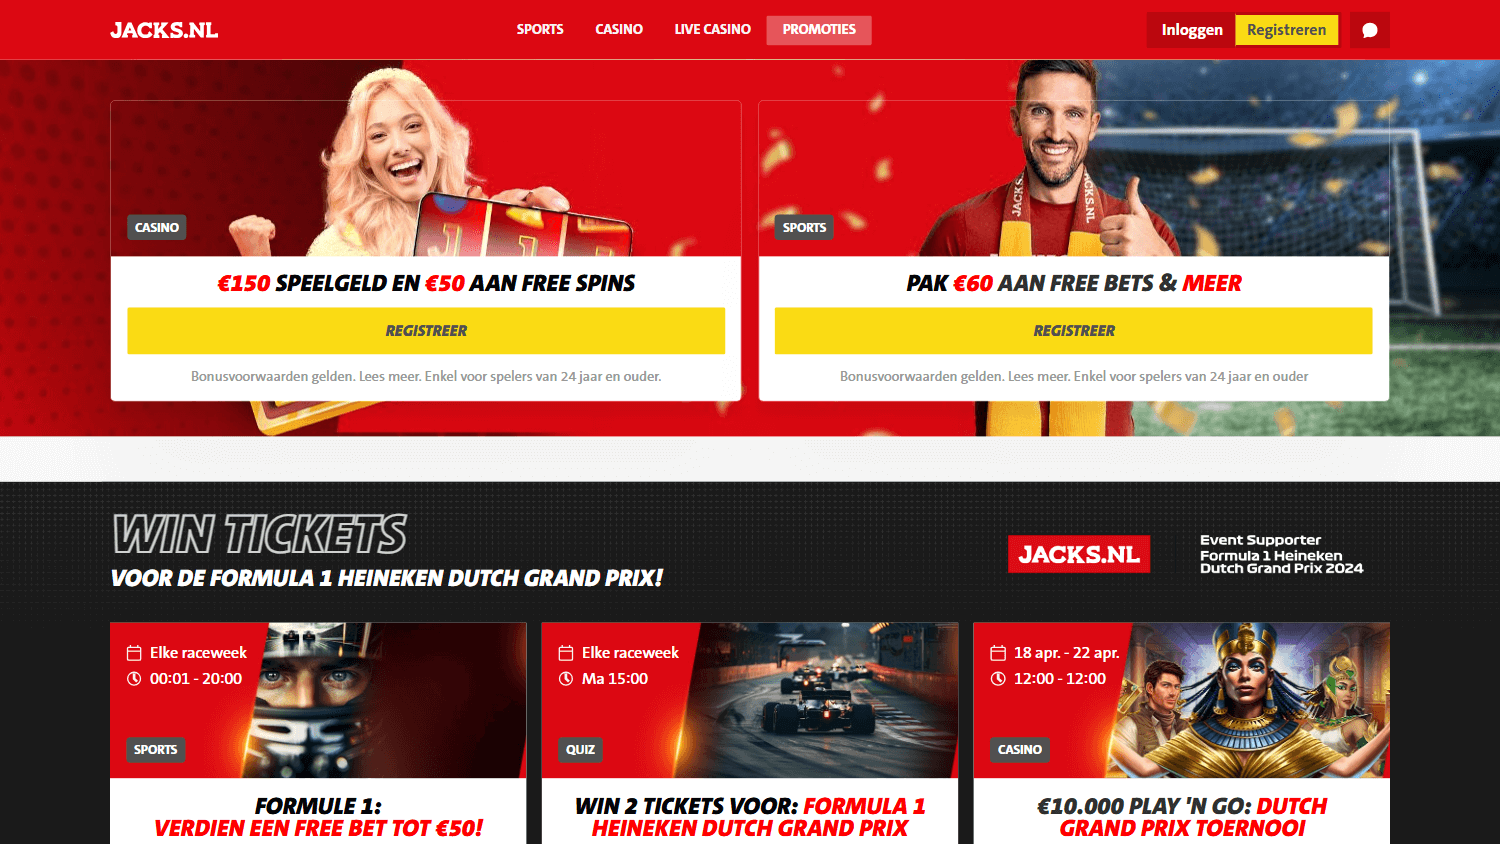 jacks.nl_casino_promotions_desktop